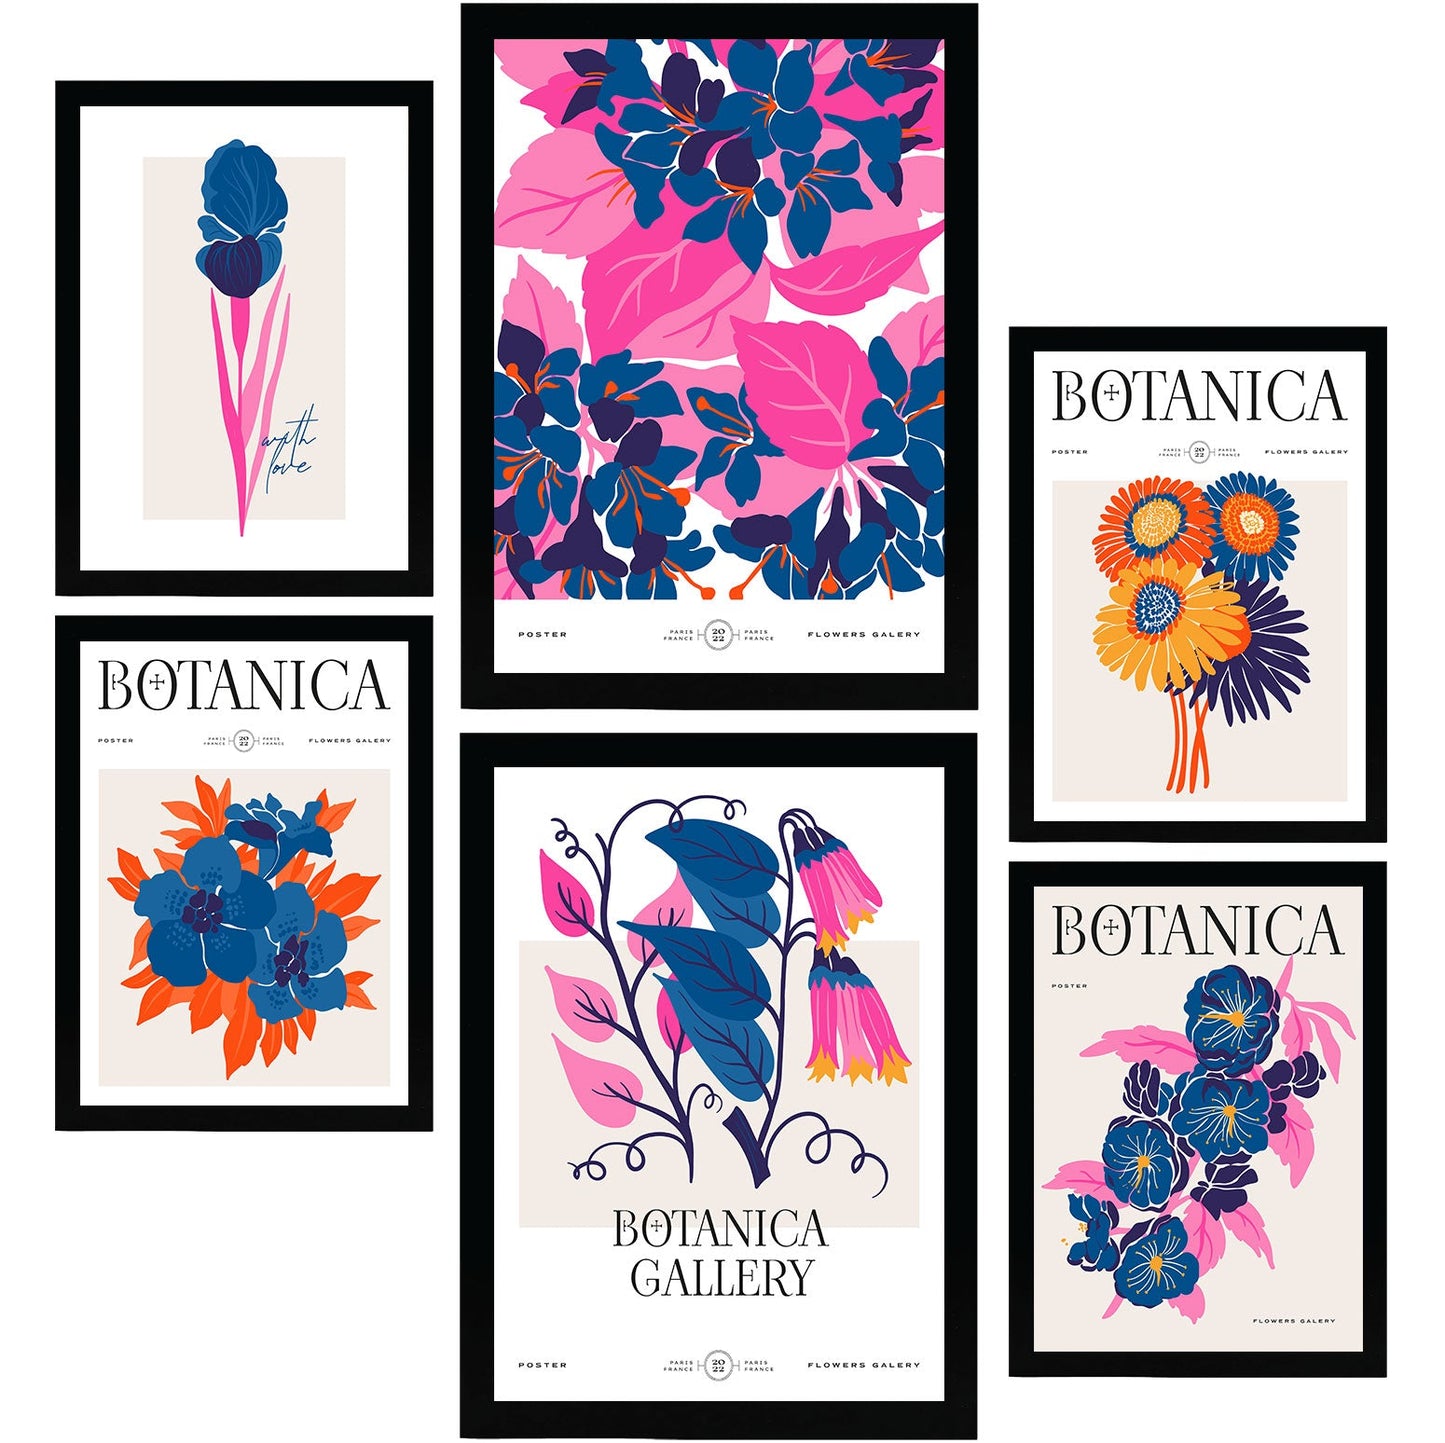 Flower Posters. Botanical Gallery. Nature and Botany-Artwork-Nacnic-Nacnic Estudio SL